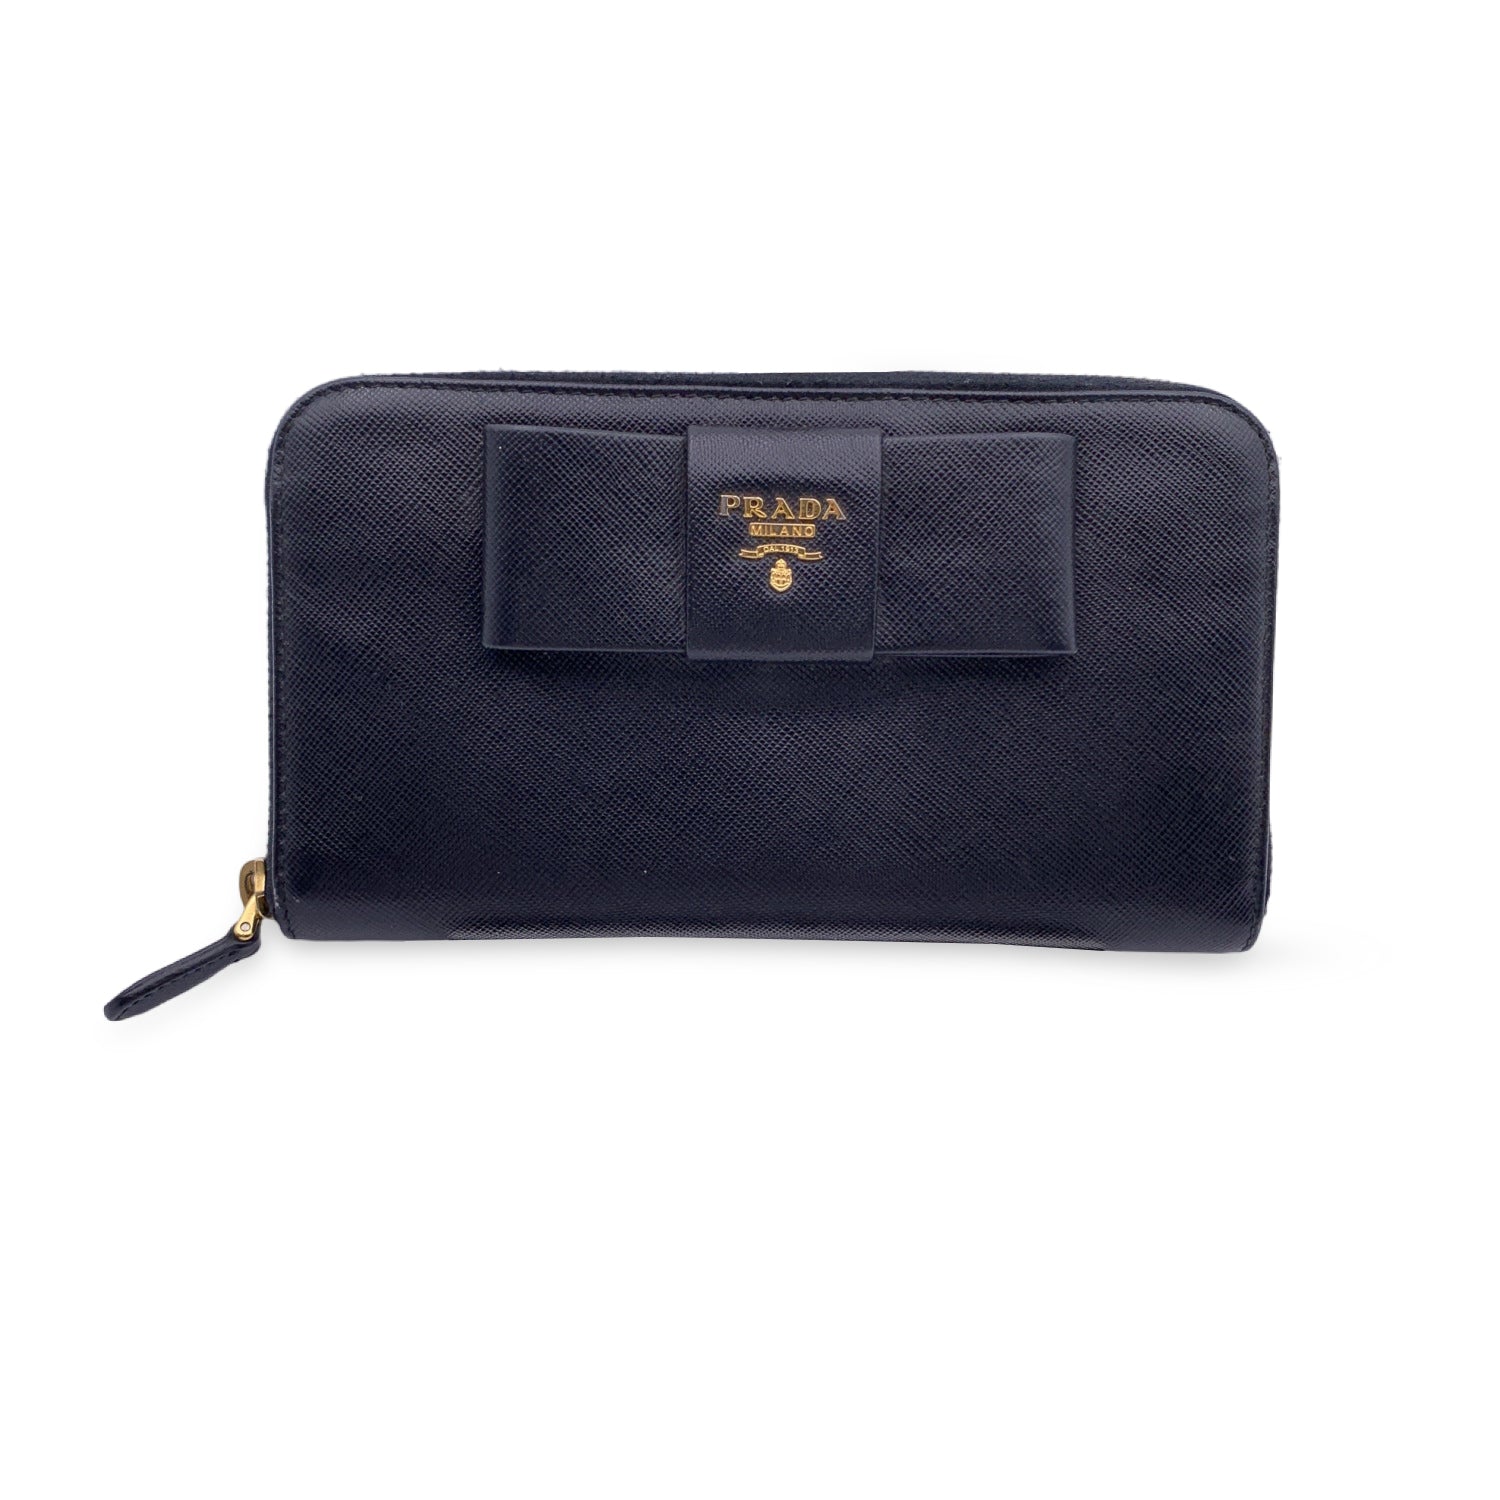 PRADA Black Saffiano Leather Continental Bow Zippy Wallet 1M0506